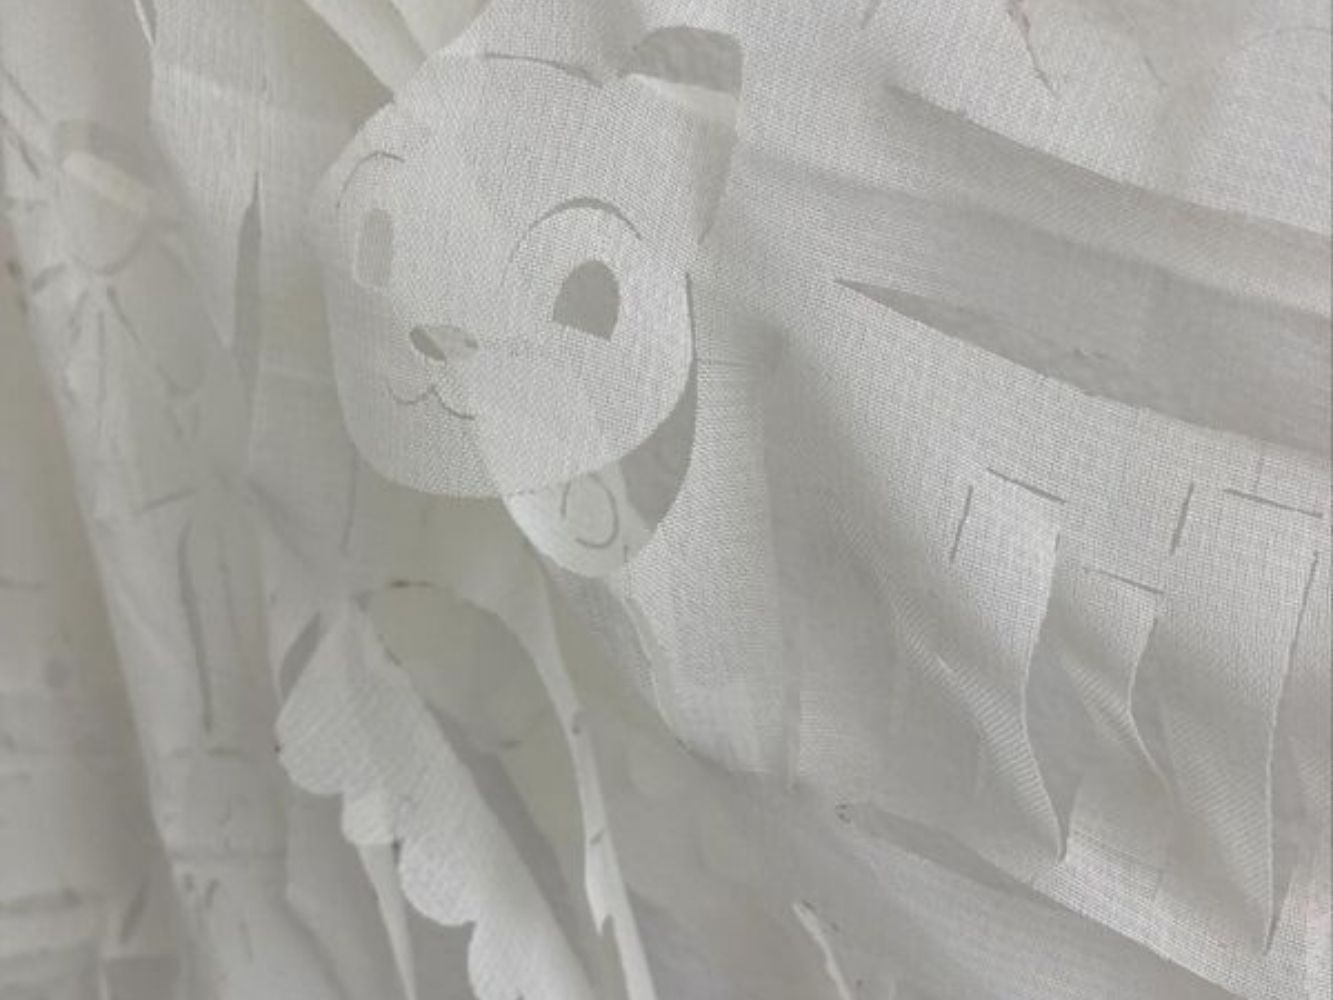 White sheet cut to look like a teddy bear face